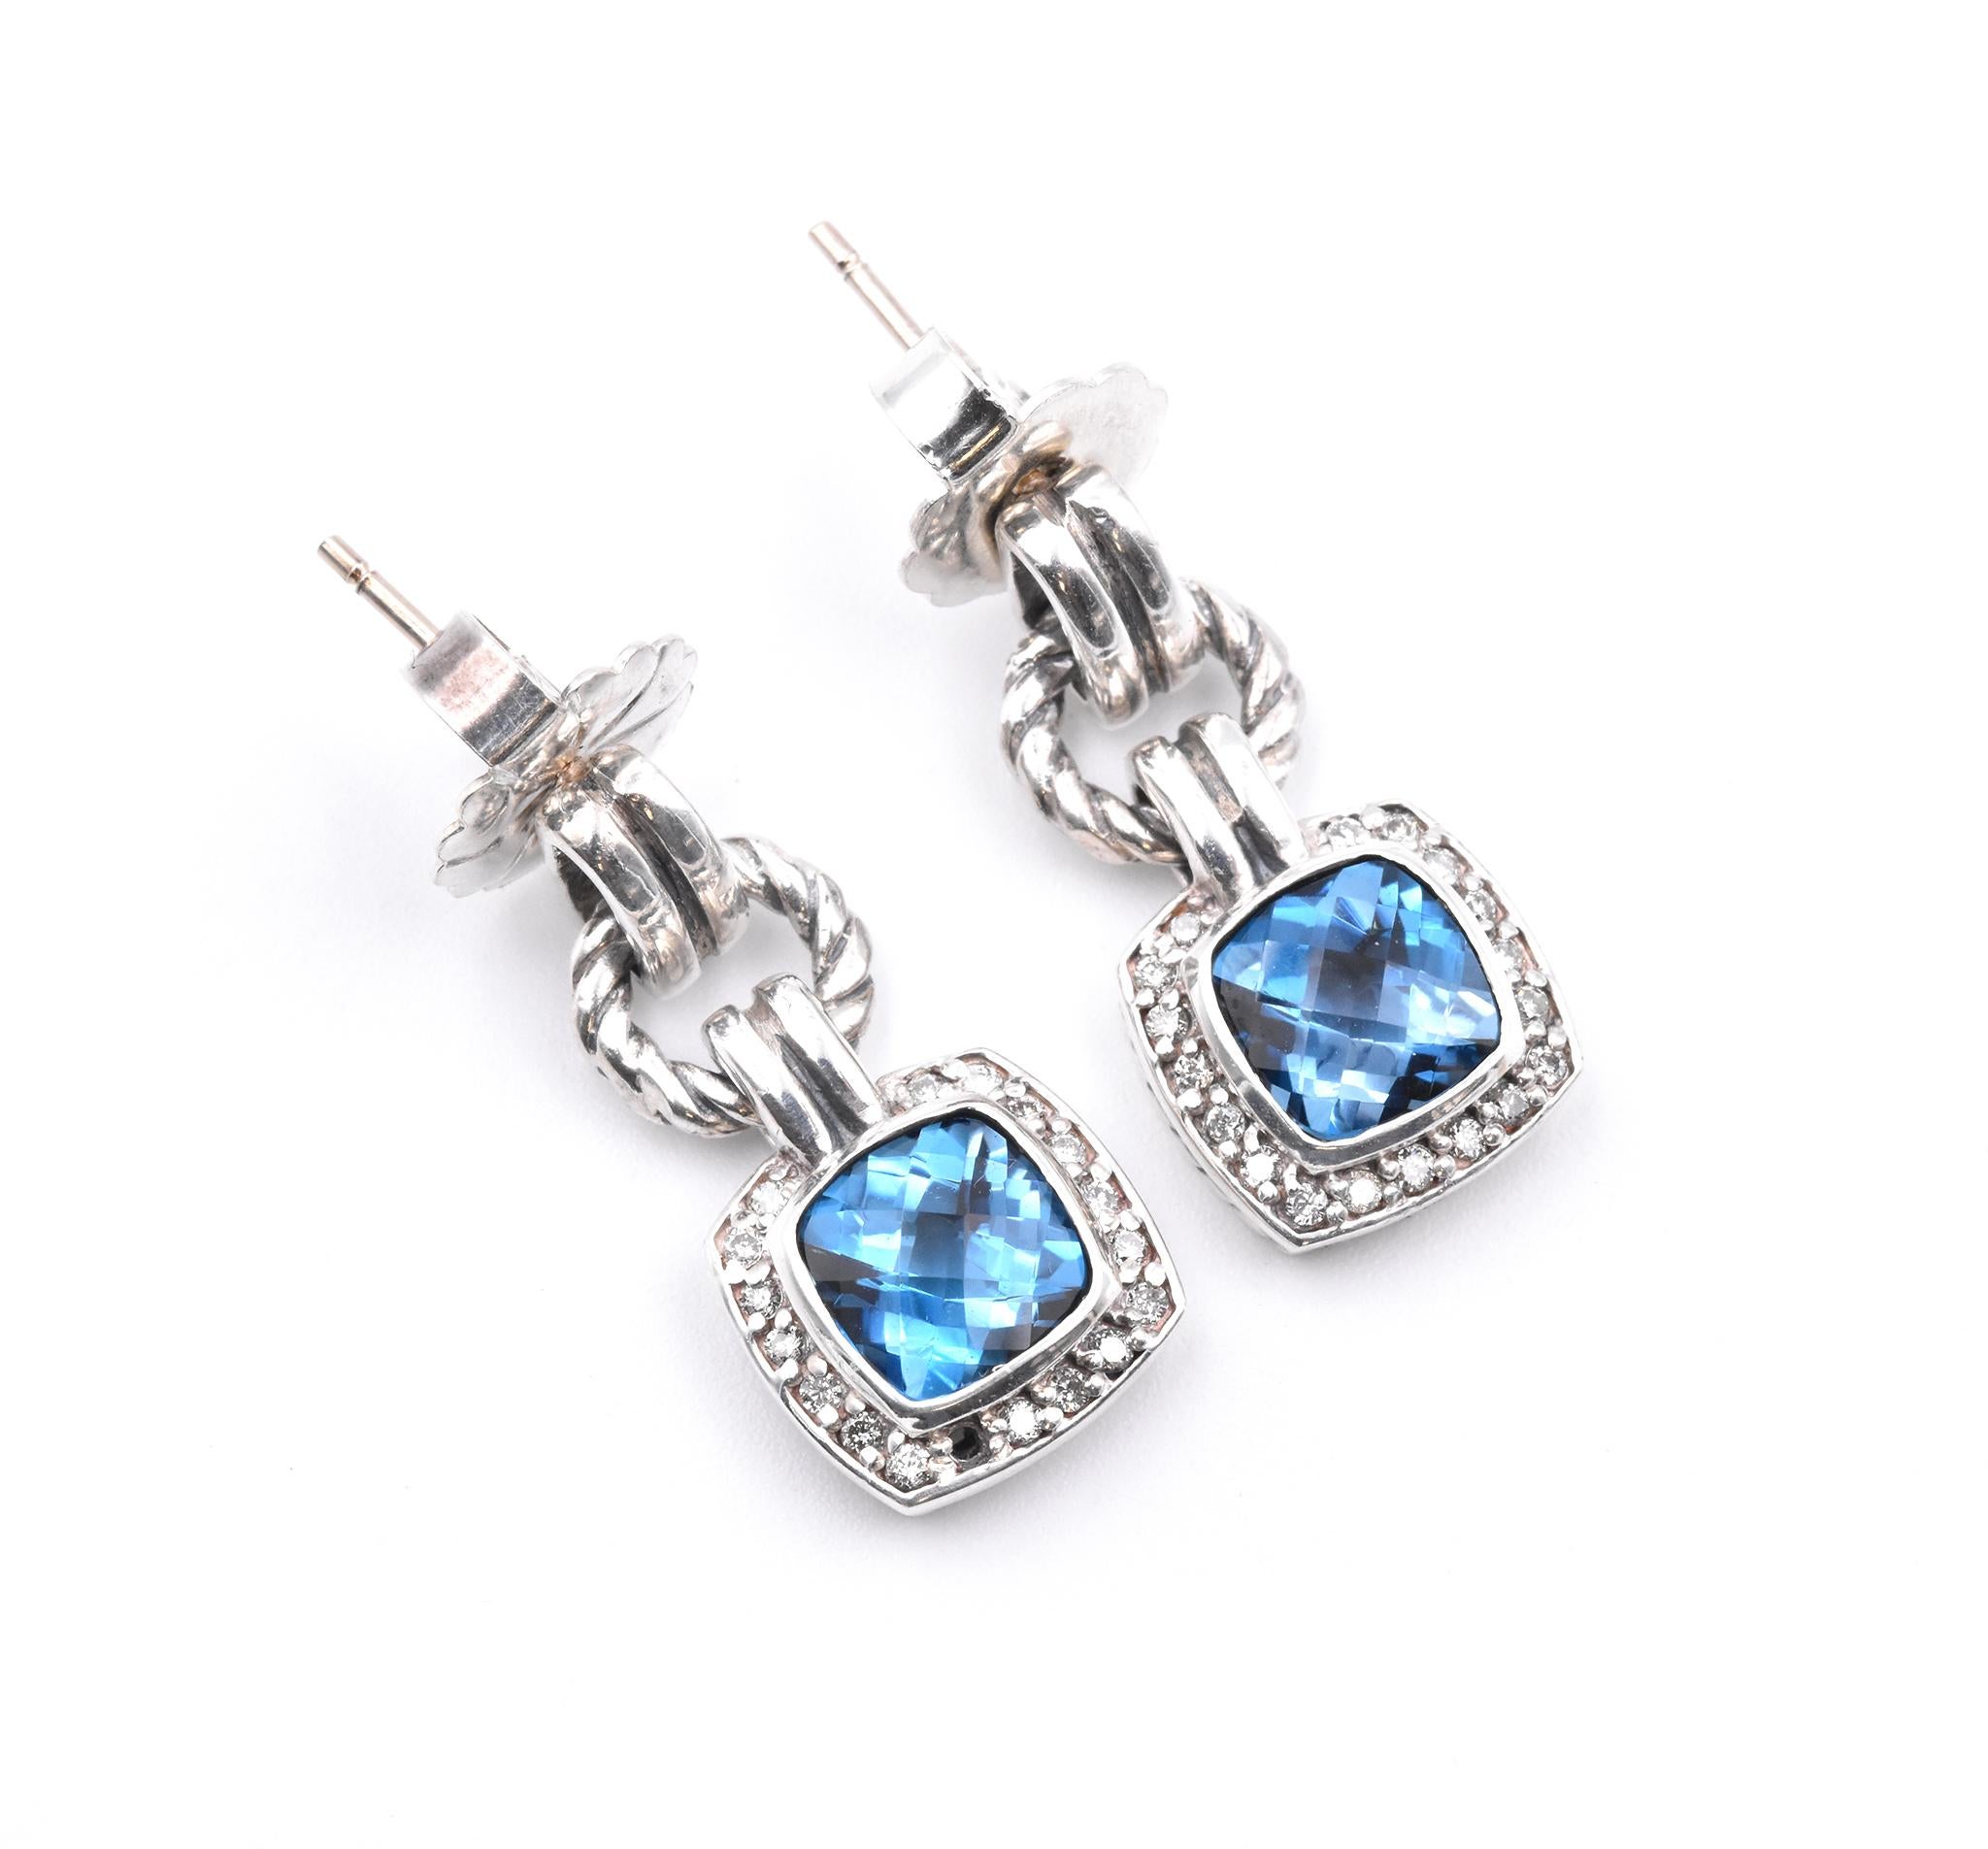 Designer: David Yurman
Material: Sterling Silver
Diamonds: 36 round cut = .25cttw
Color: G
Clarity: VS
Blue Topaz: 2 cushion cut = 9.50cttw
Weight: 7.65 grams